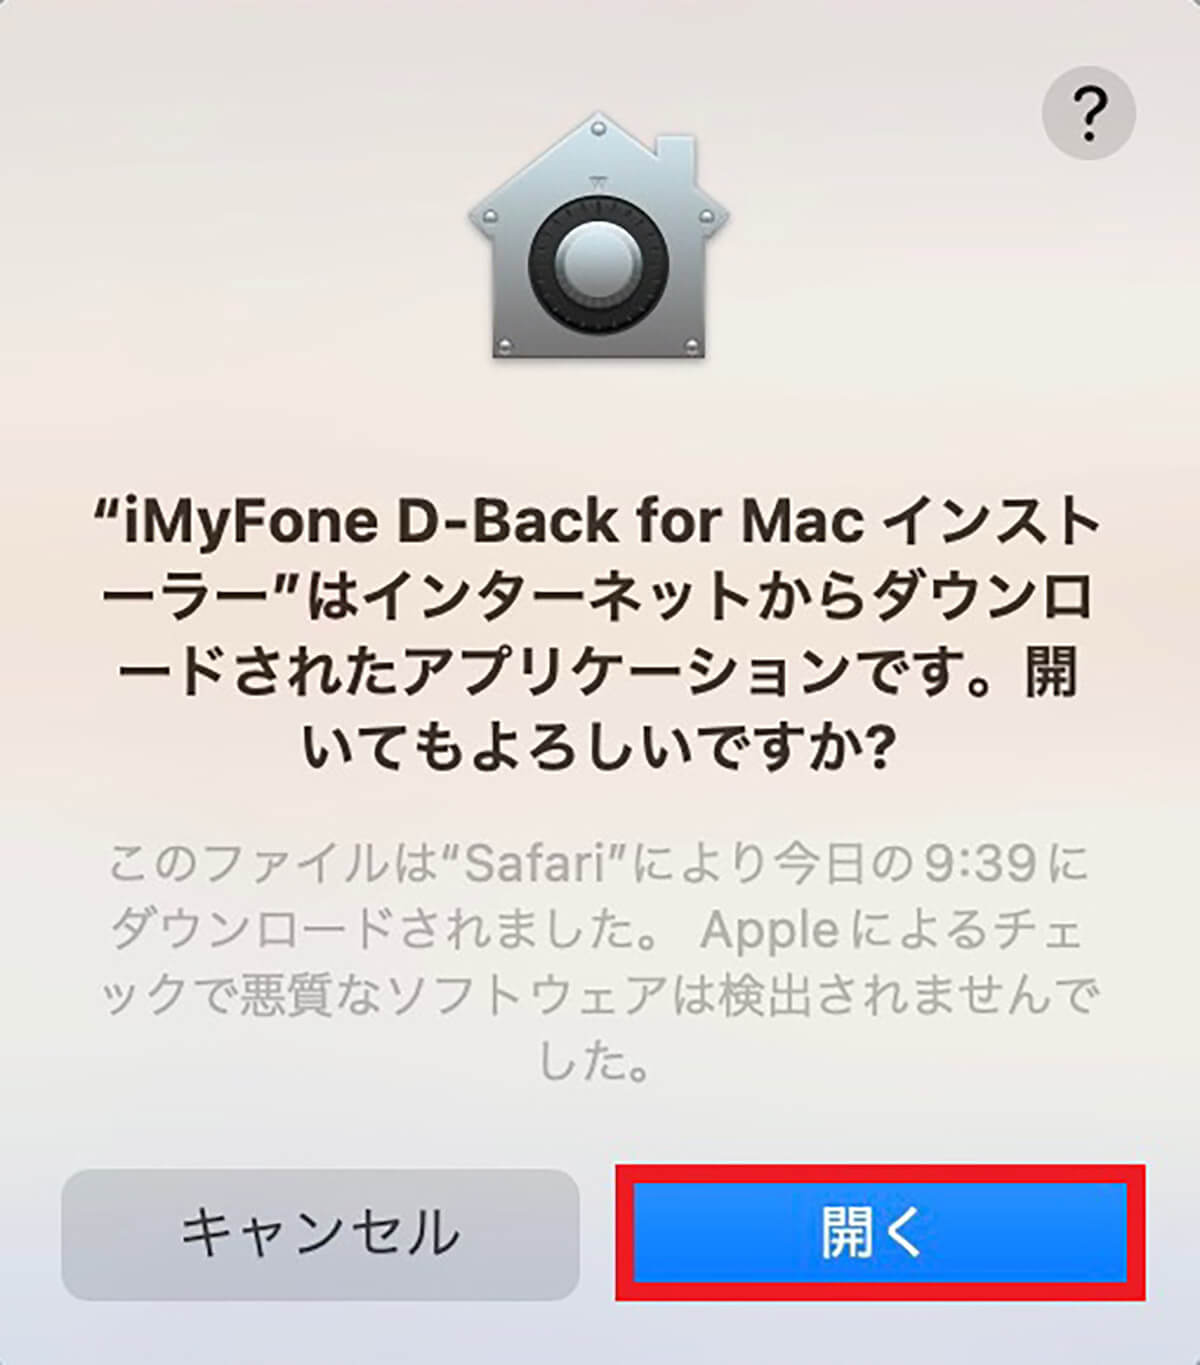 「Time Machine」でデータを復元できない時の対処法として「iMyFone D-Back for Mac」を紹介5